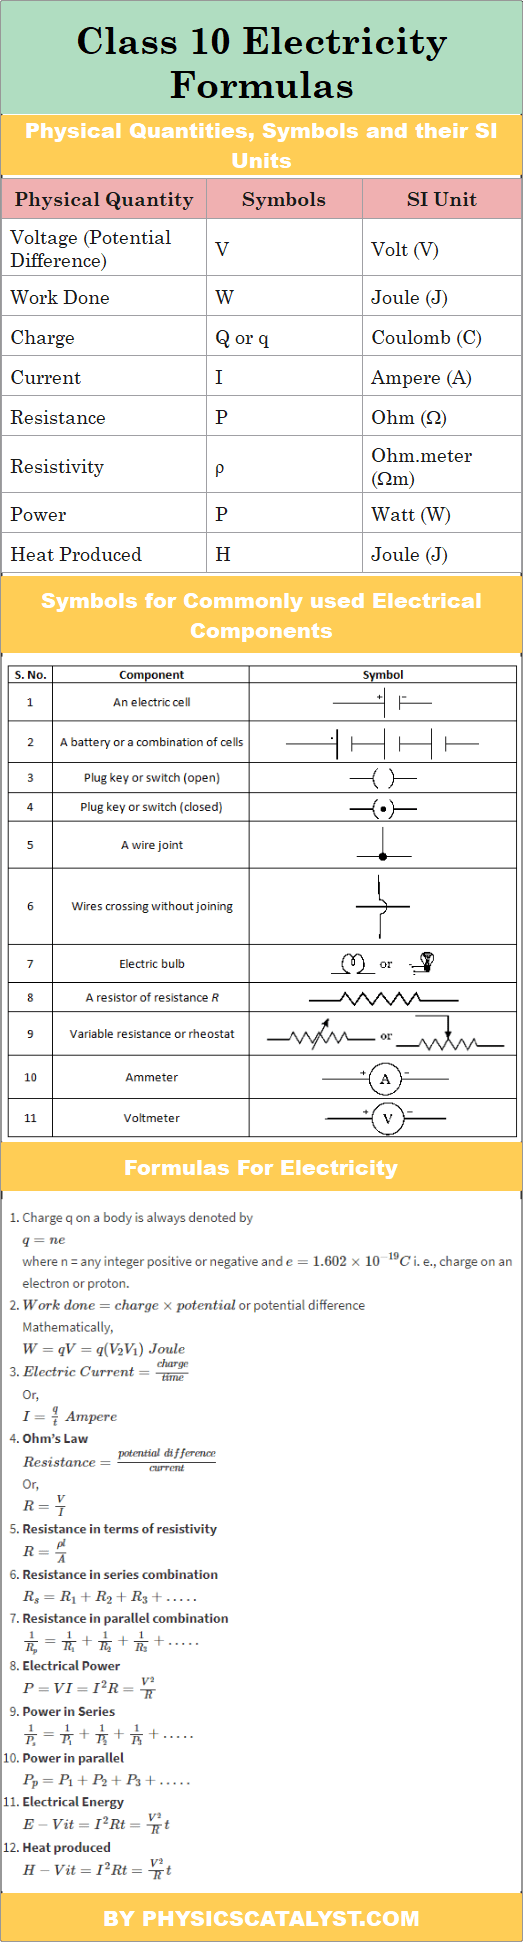 Class 10 electricity formulas